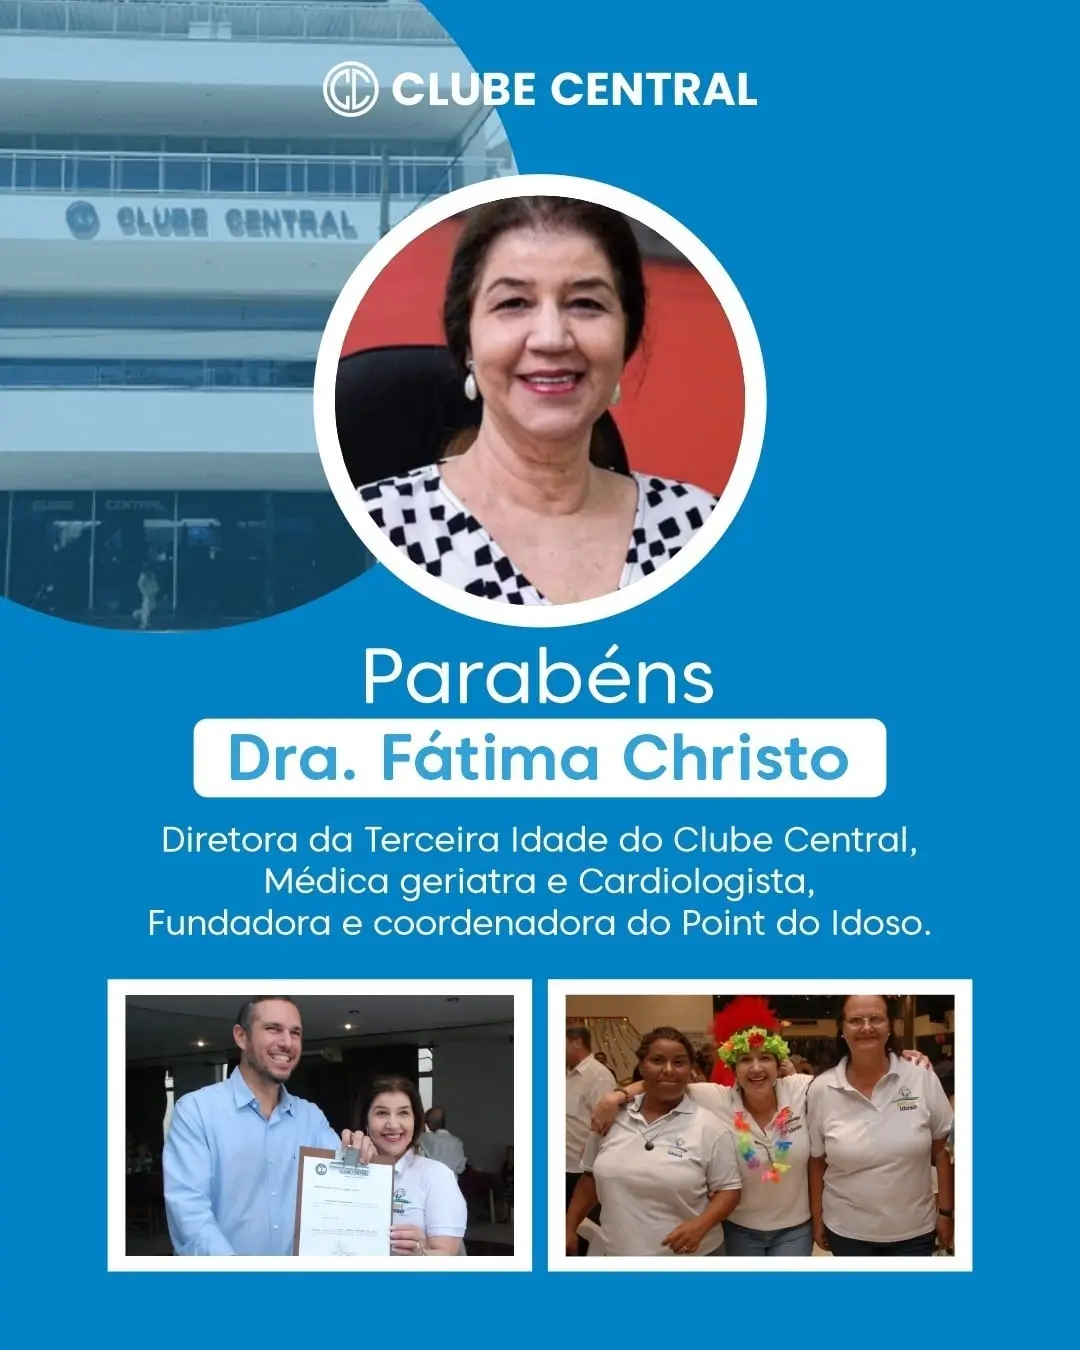 Parabéns Dra. Fátima Fernandes Christo